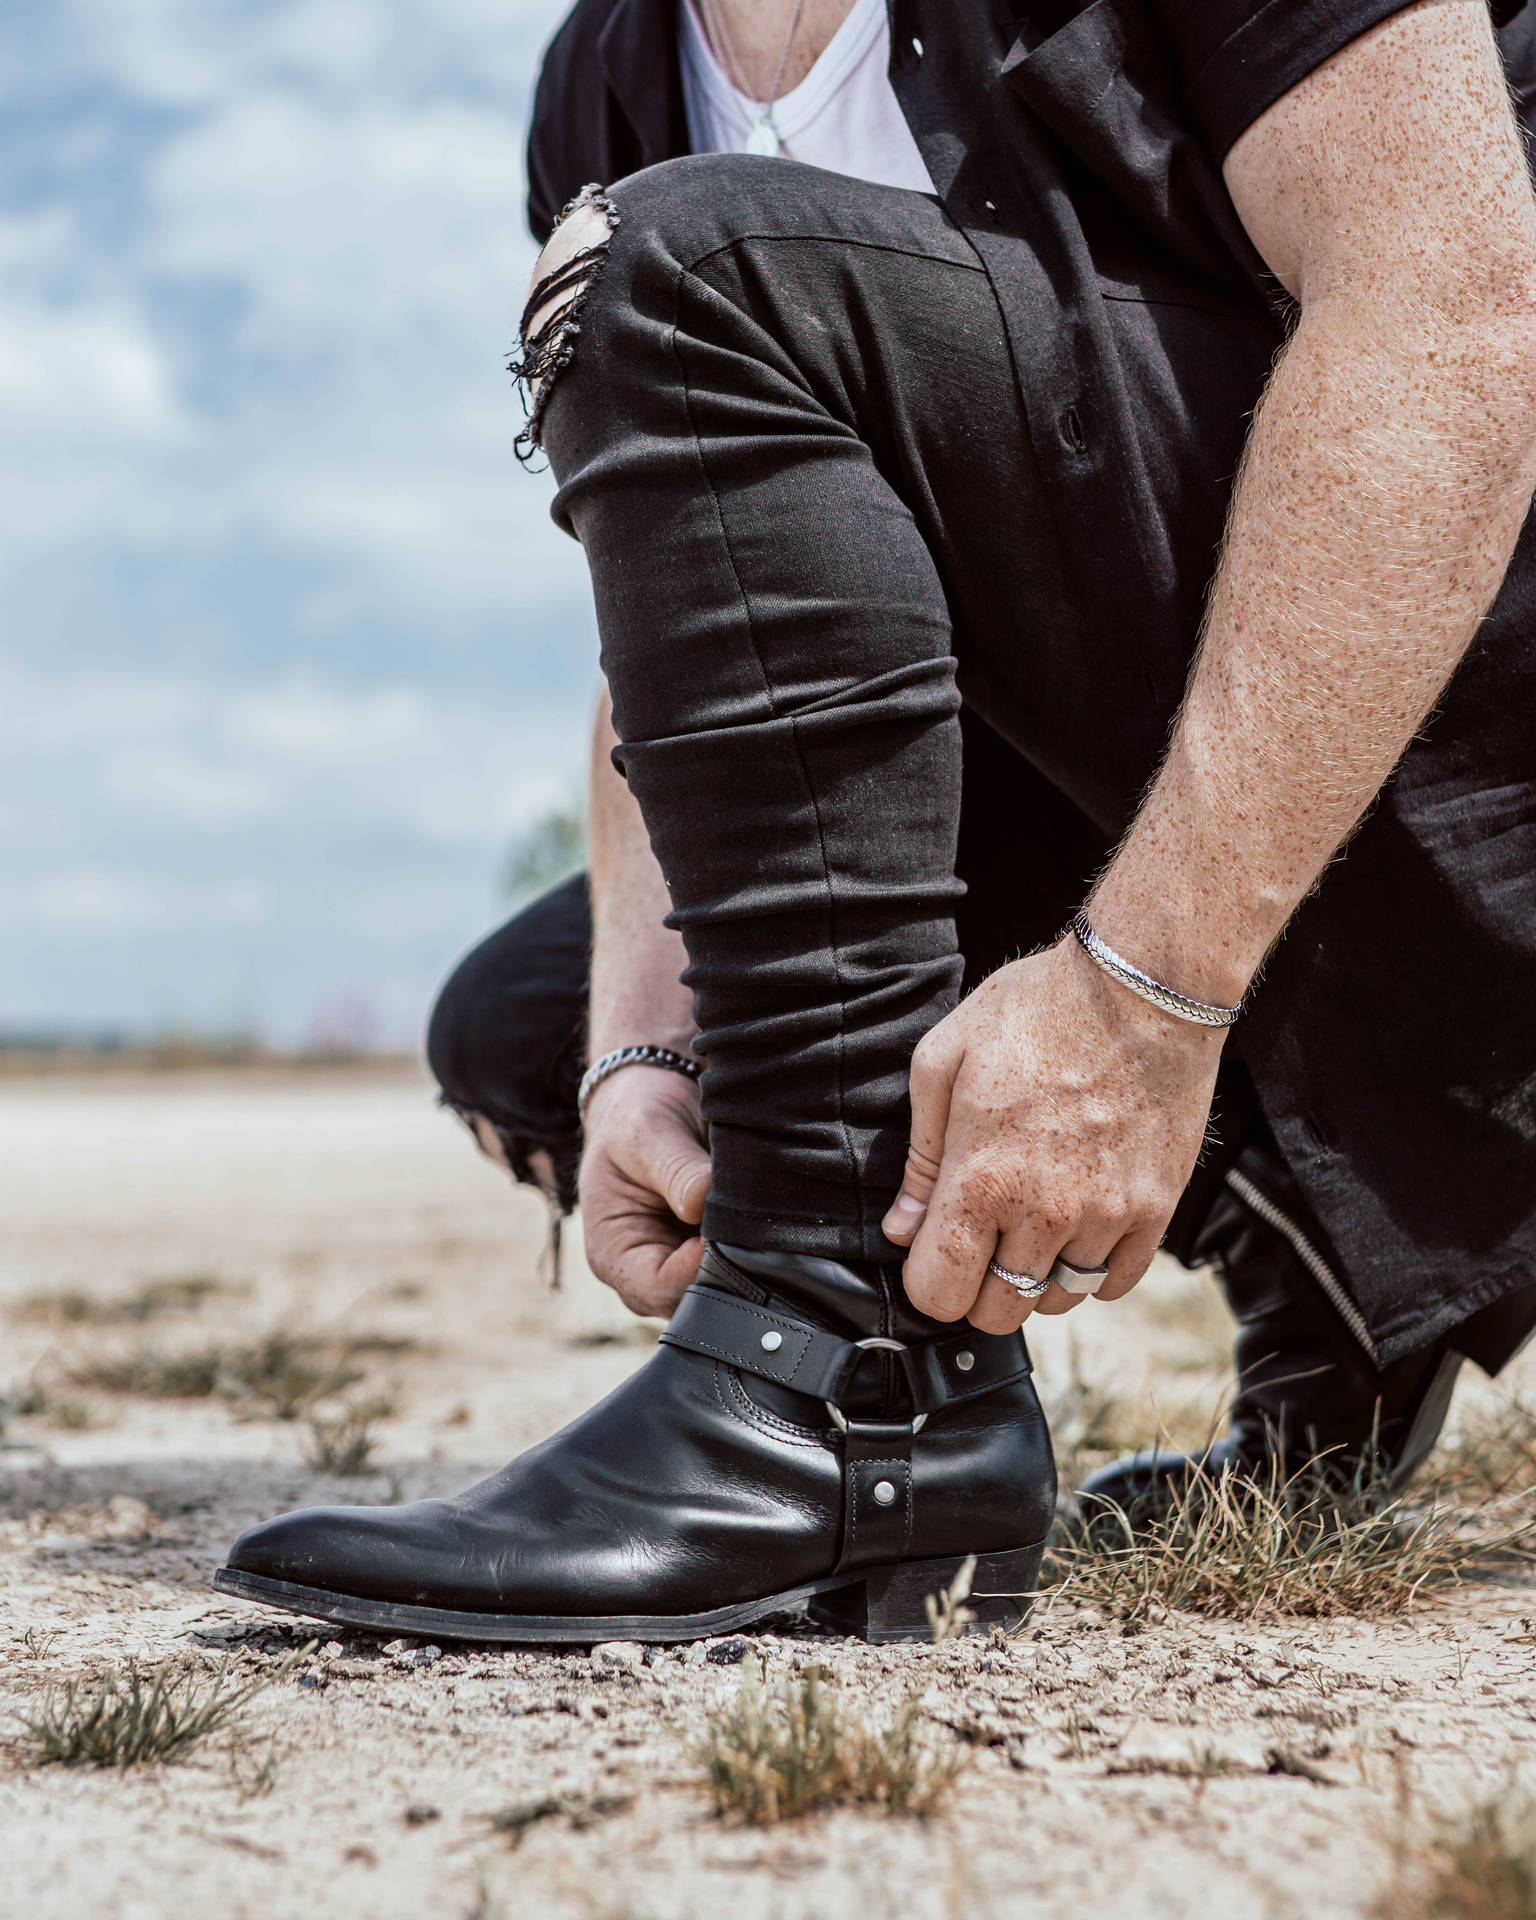 Caption: Sleek Black Strapped Leather Shoes Background